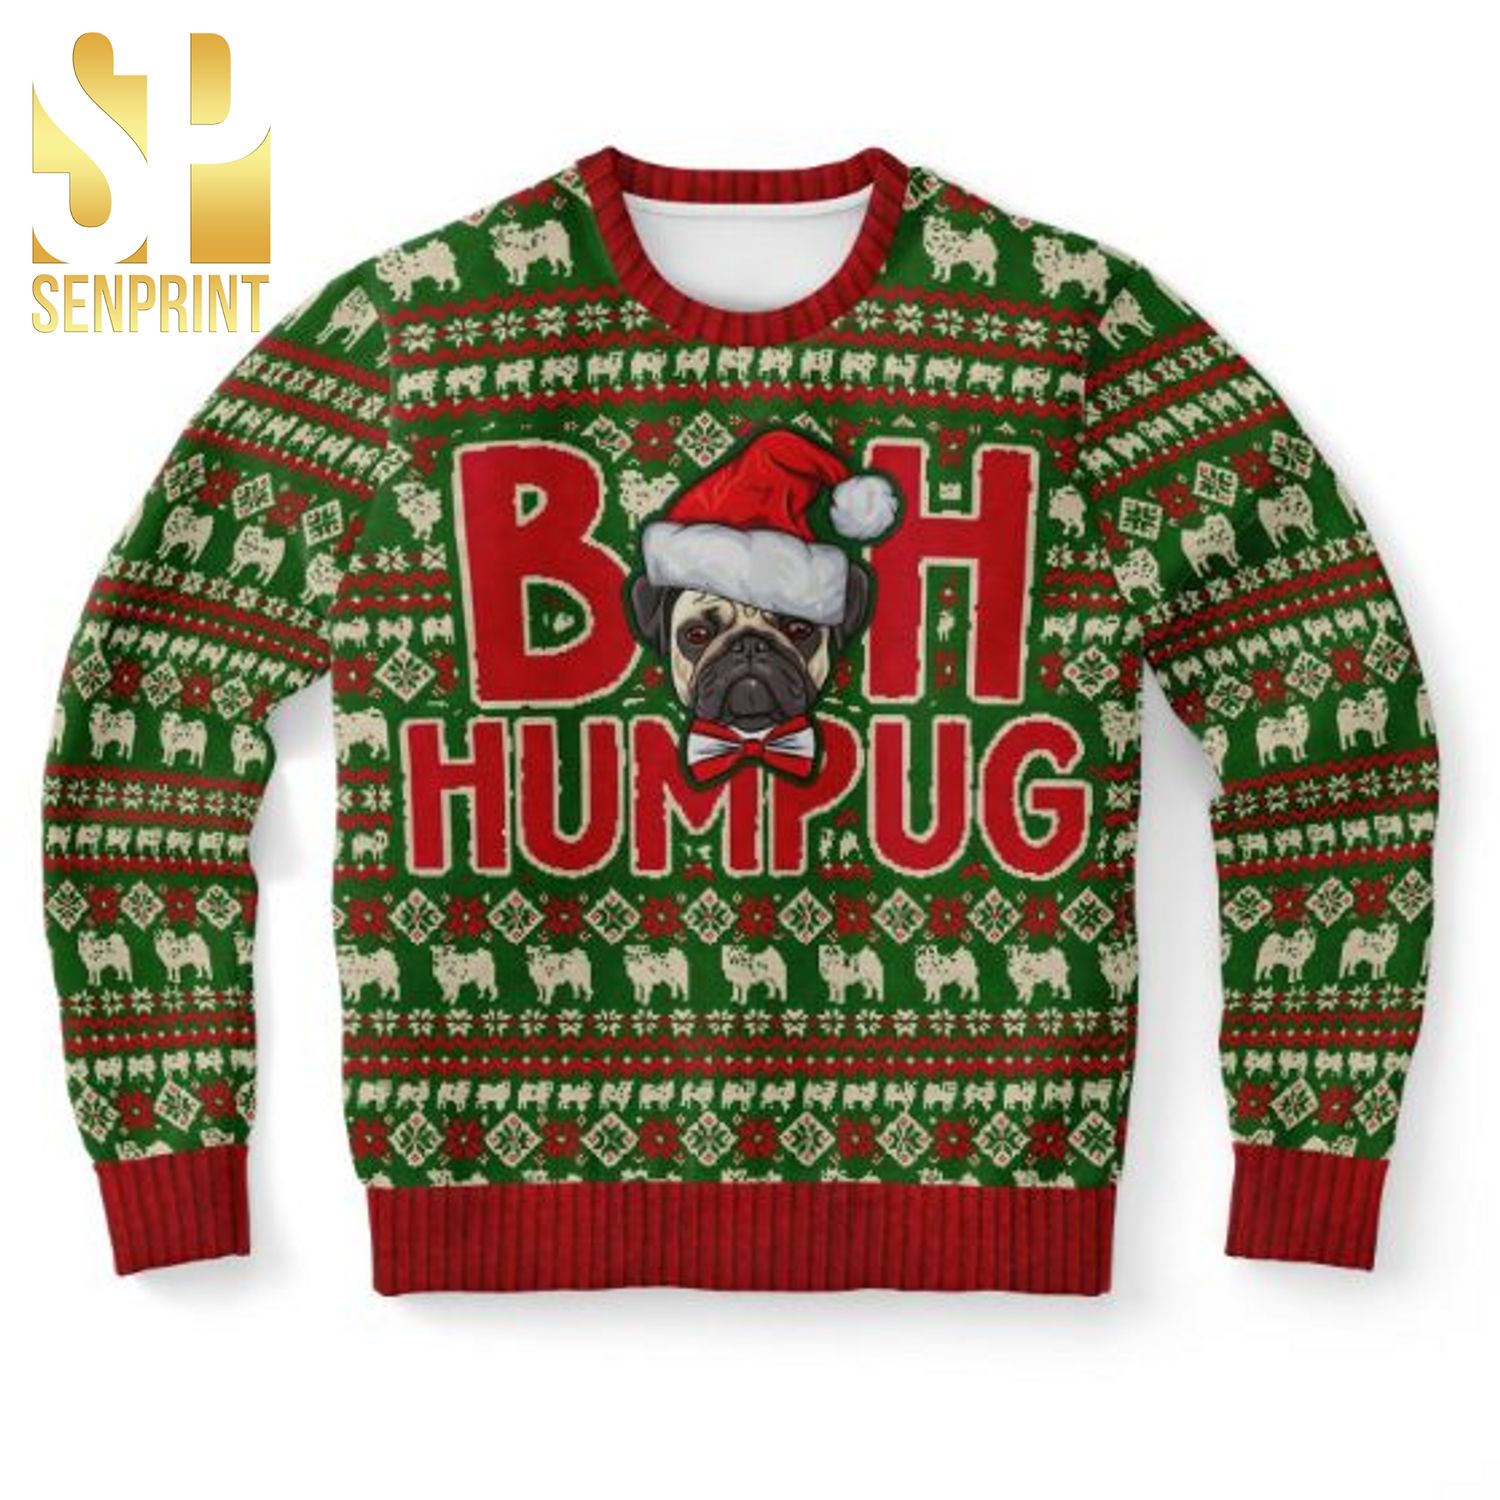 Bah Humpug Ugly Christmas Wool Knitted Sweater